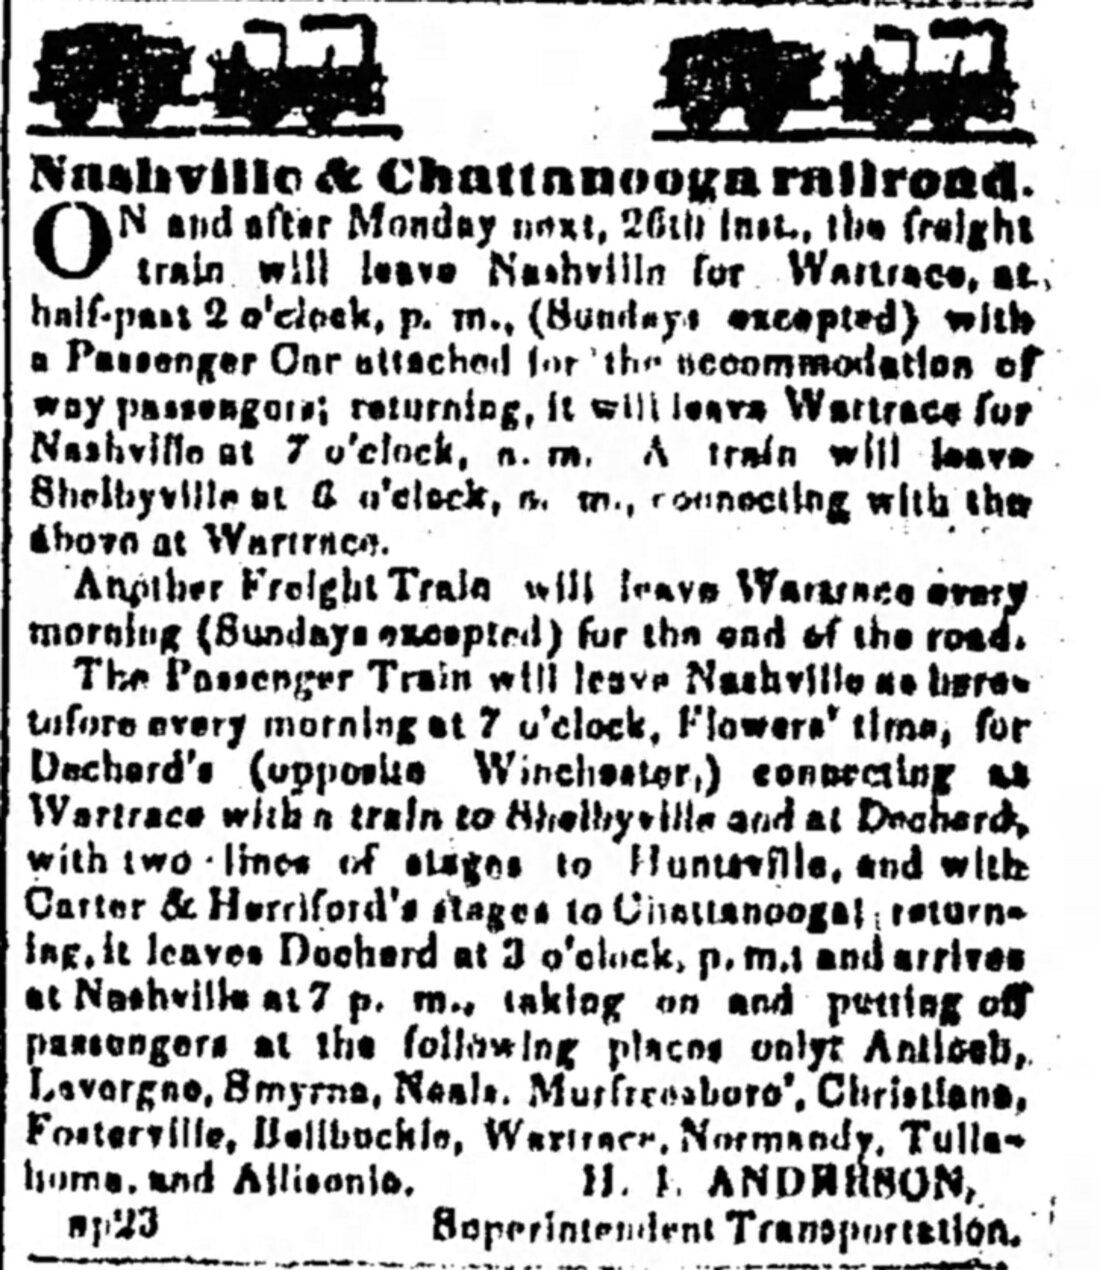 Allisonia (Estill Springs Tennessee) Newspaper article 1852